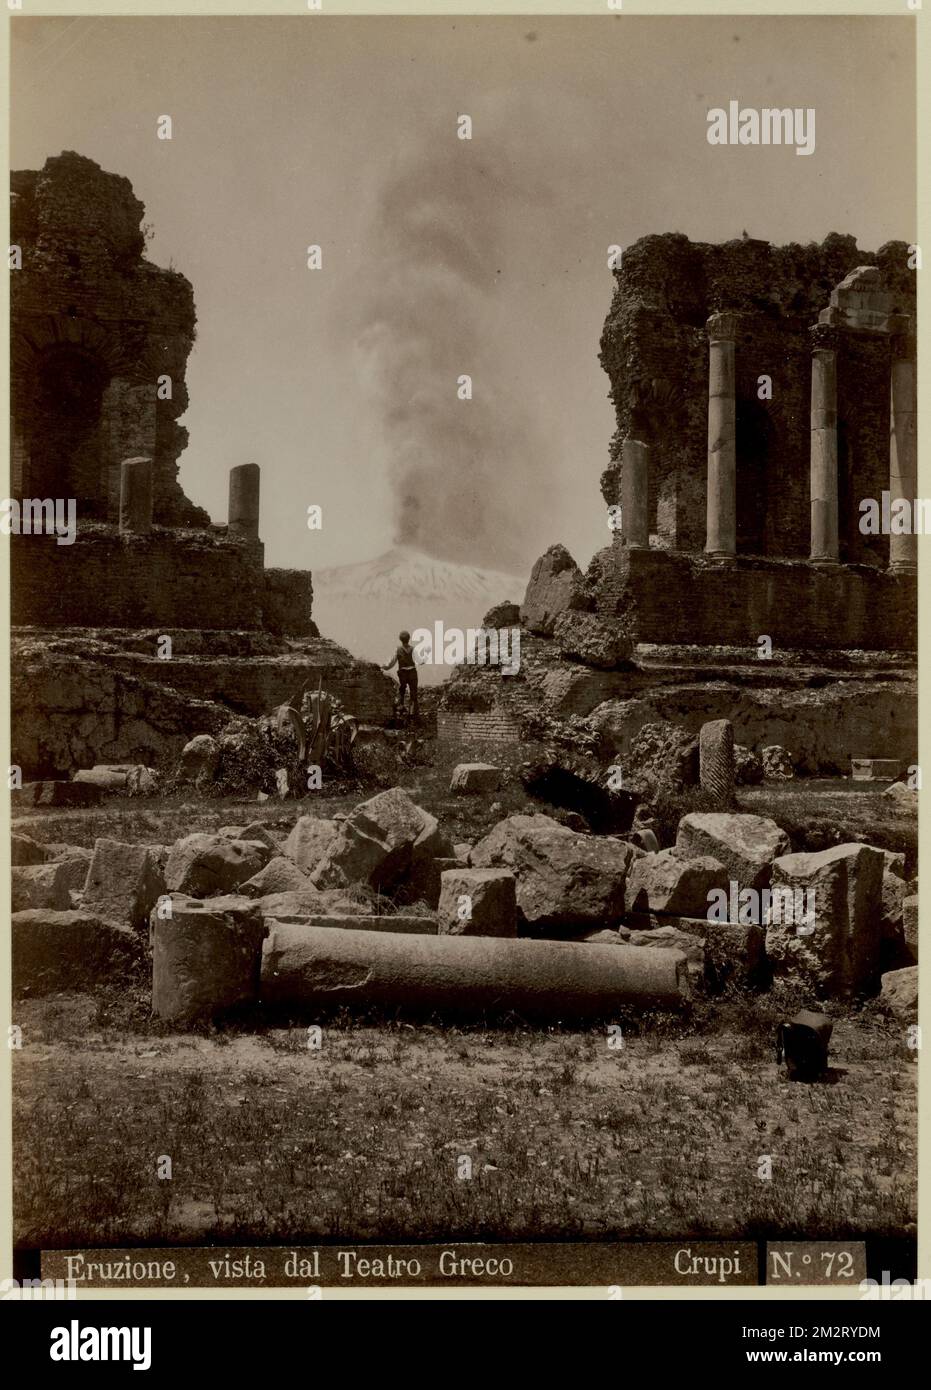 Eruzione, vista dal Teatro Greco , Archaeological sites, Amphitheaters, Volcanoes, Volcanic eruptions. Nicholas Catsimpoolas Collection Stock Photo